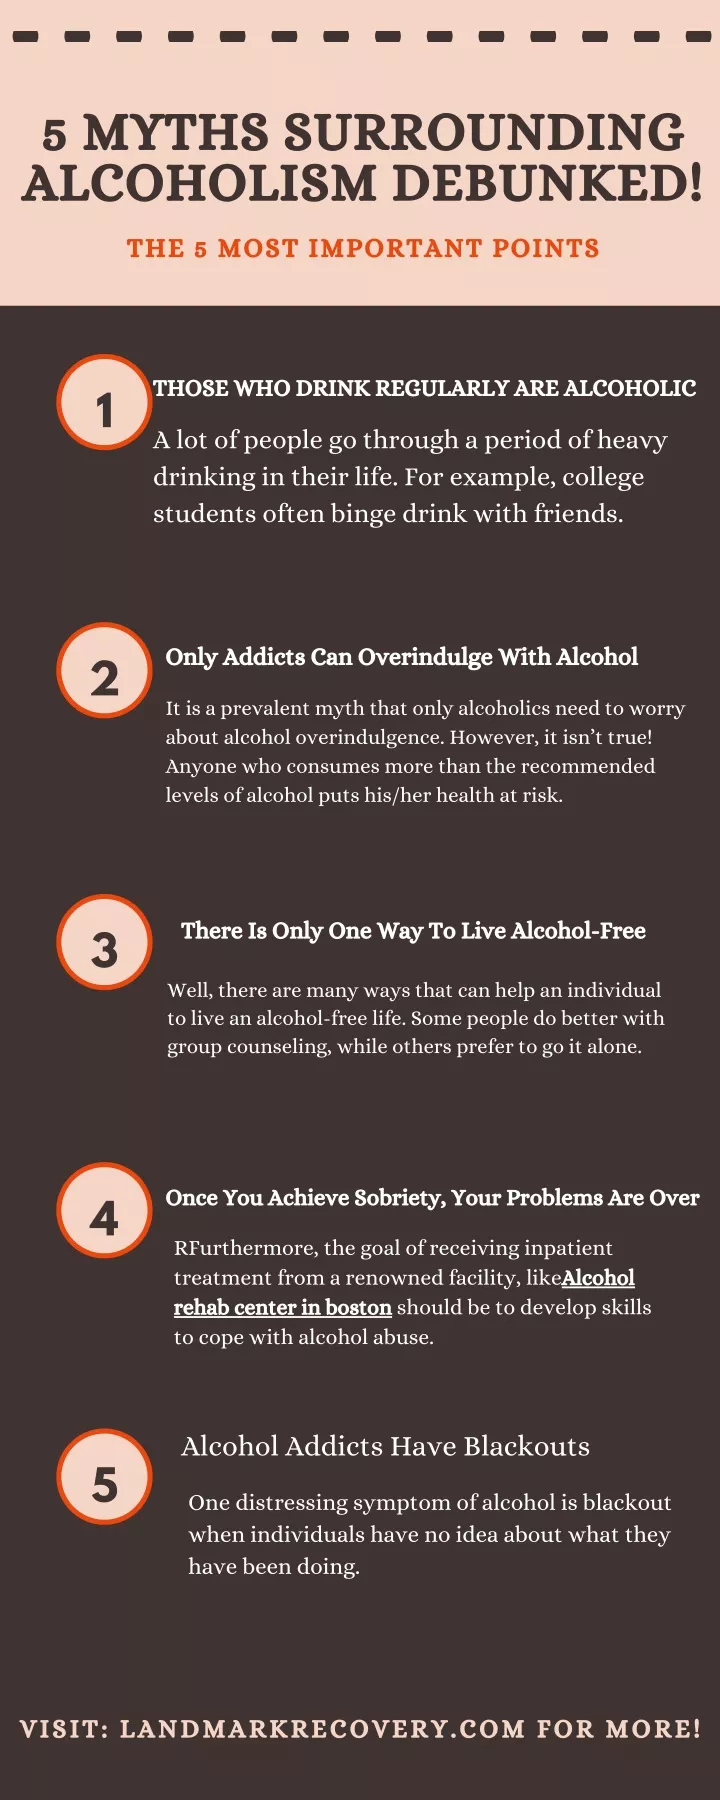 5 myths surrounding alcoholism debunked